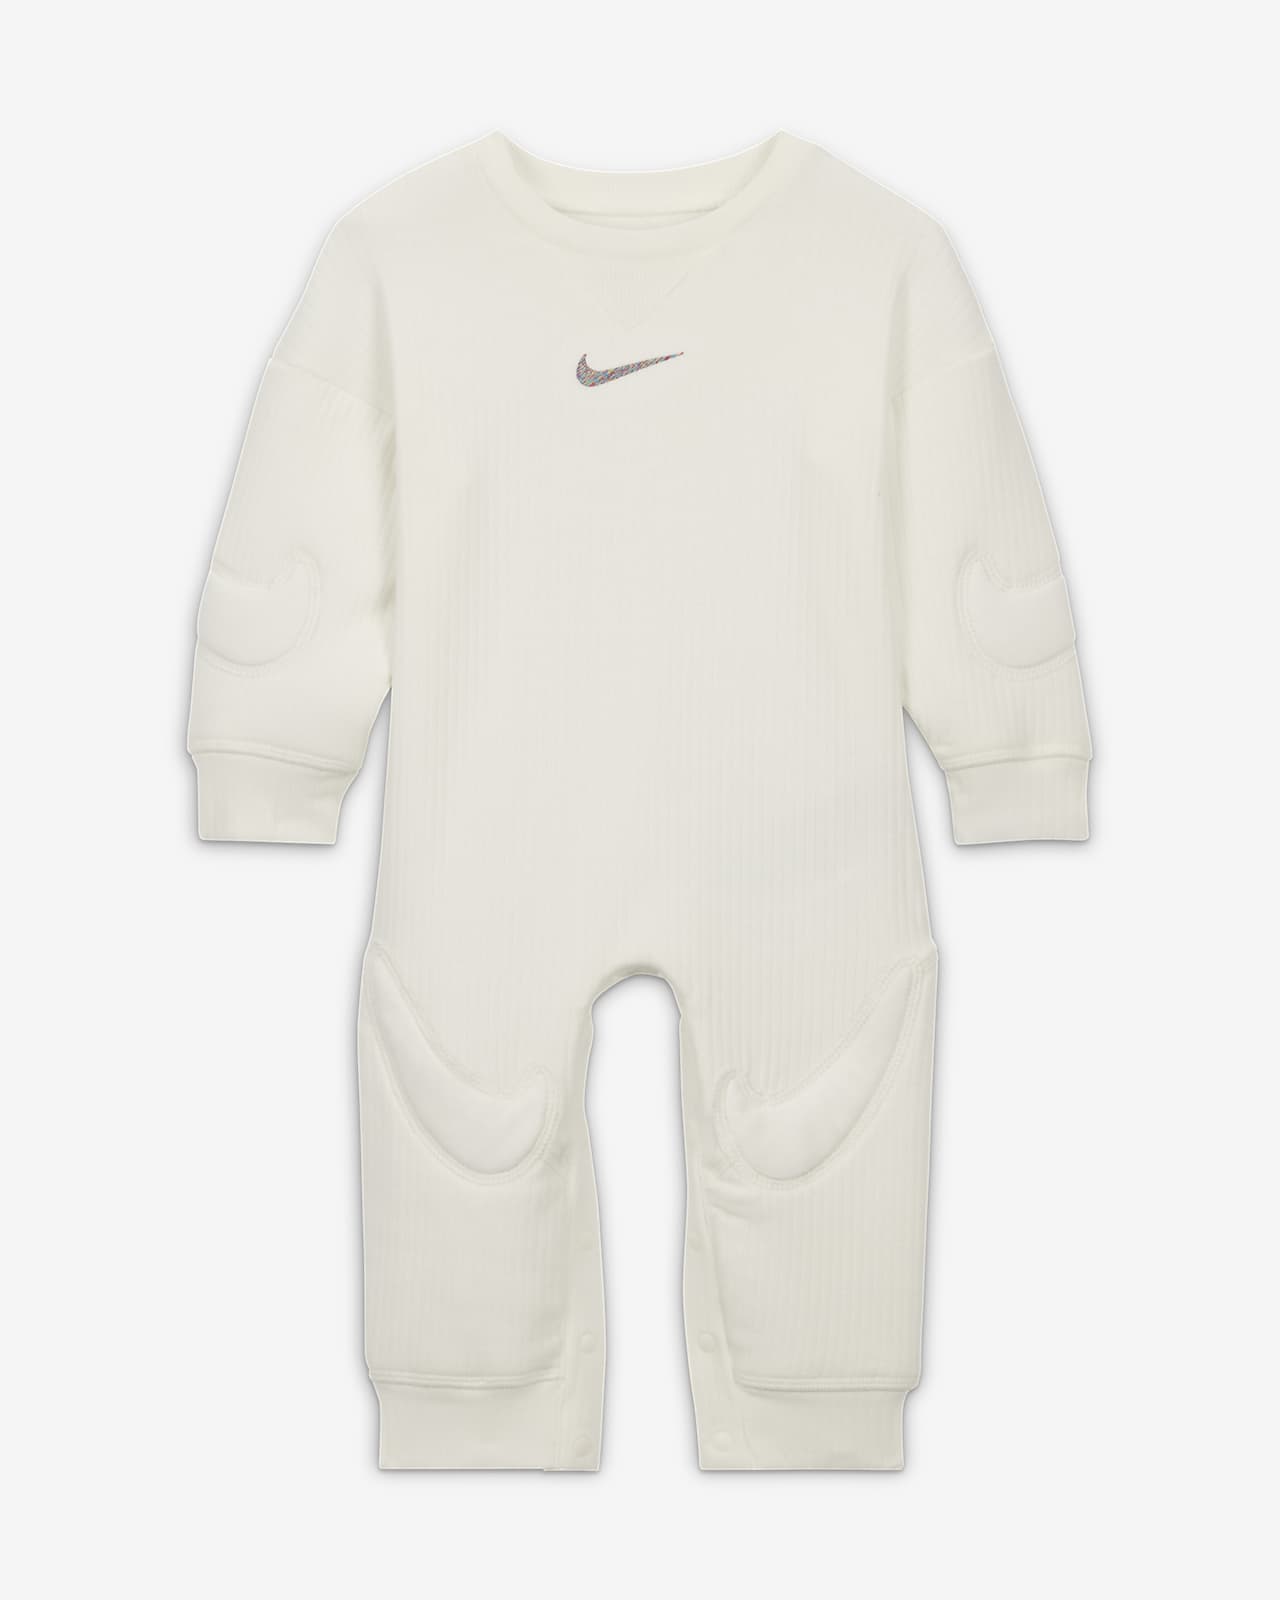 Nike "Ready, Set" 婴童连体衣